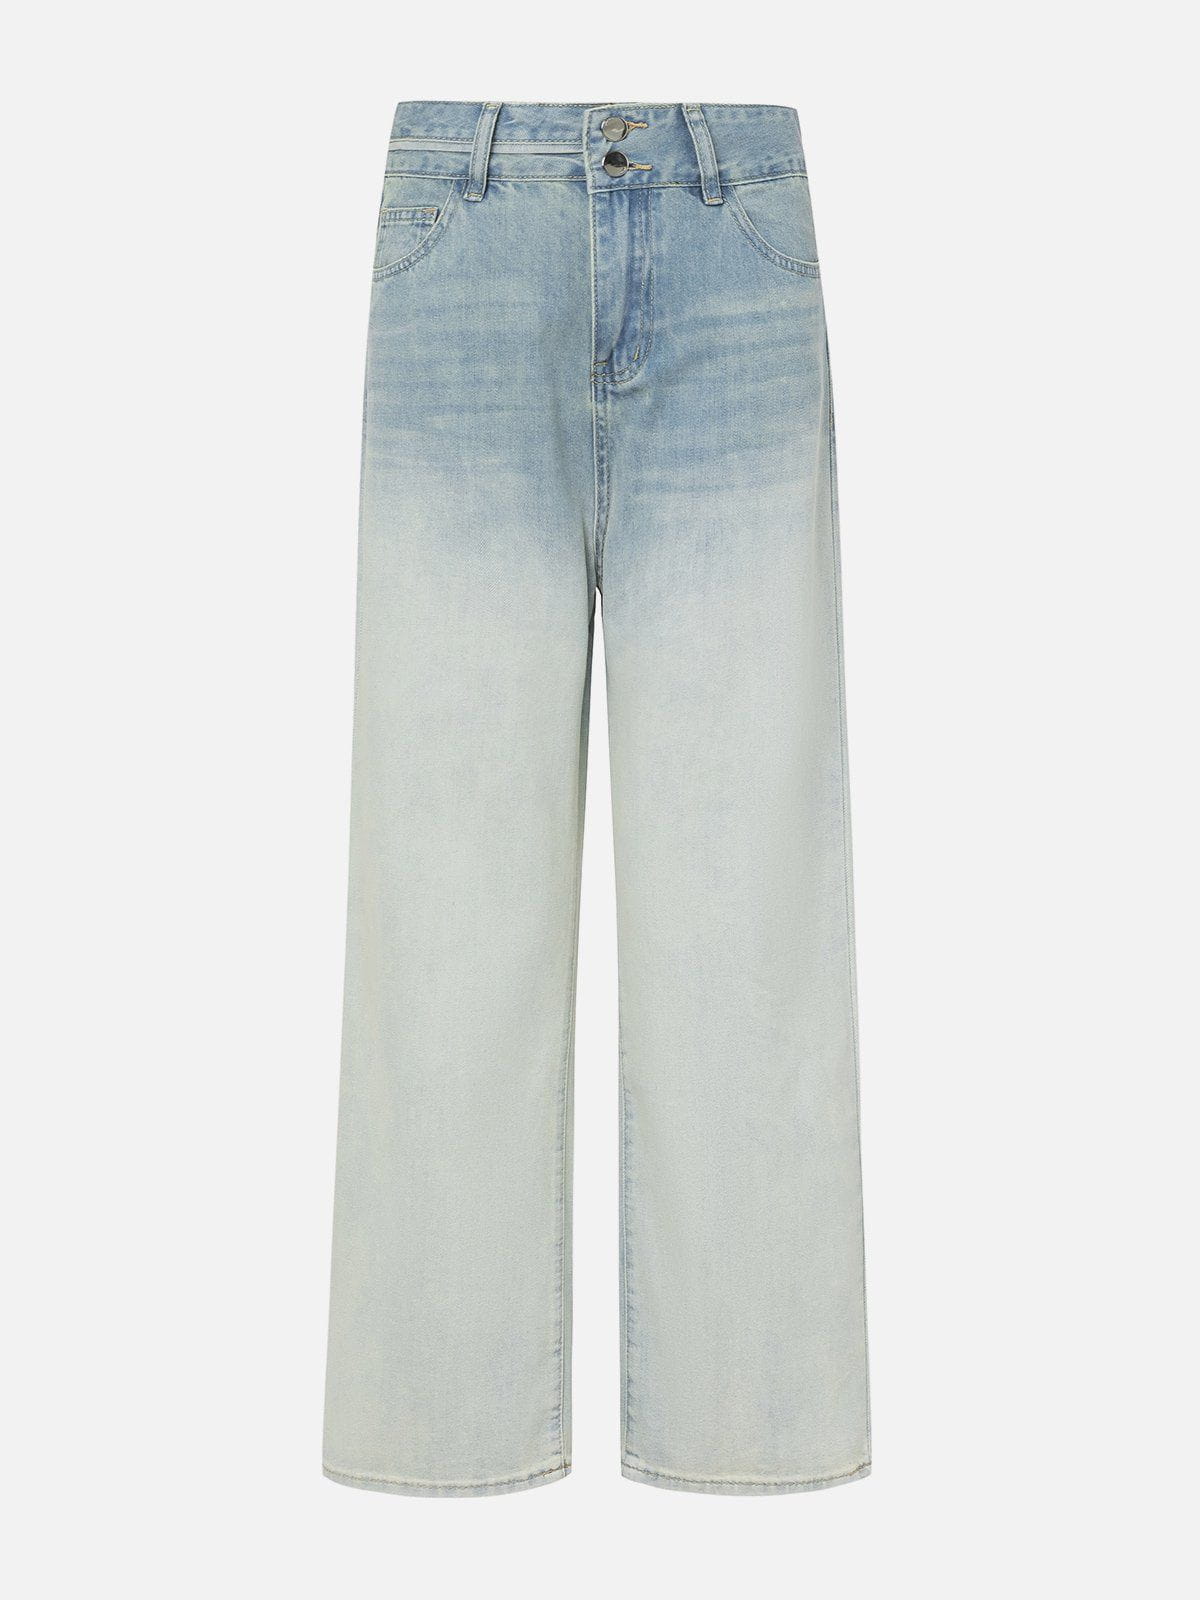 Aelfric Eden Basic Gradient Jeans